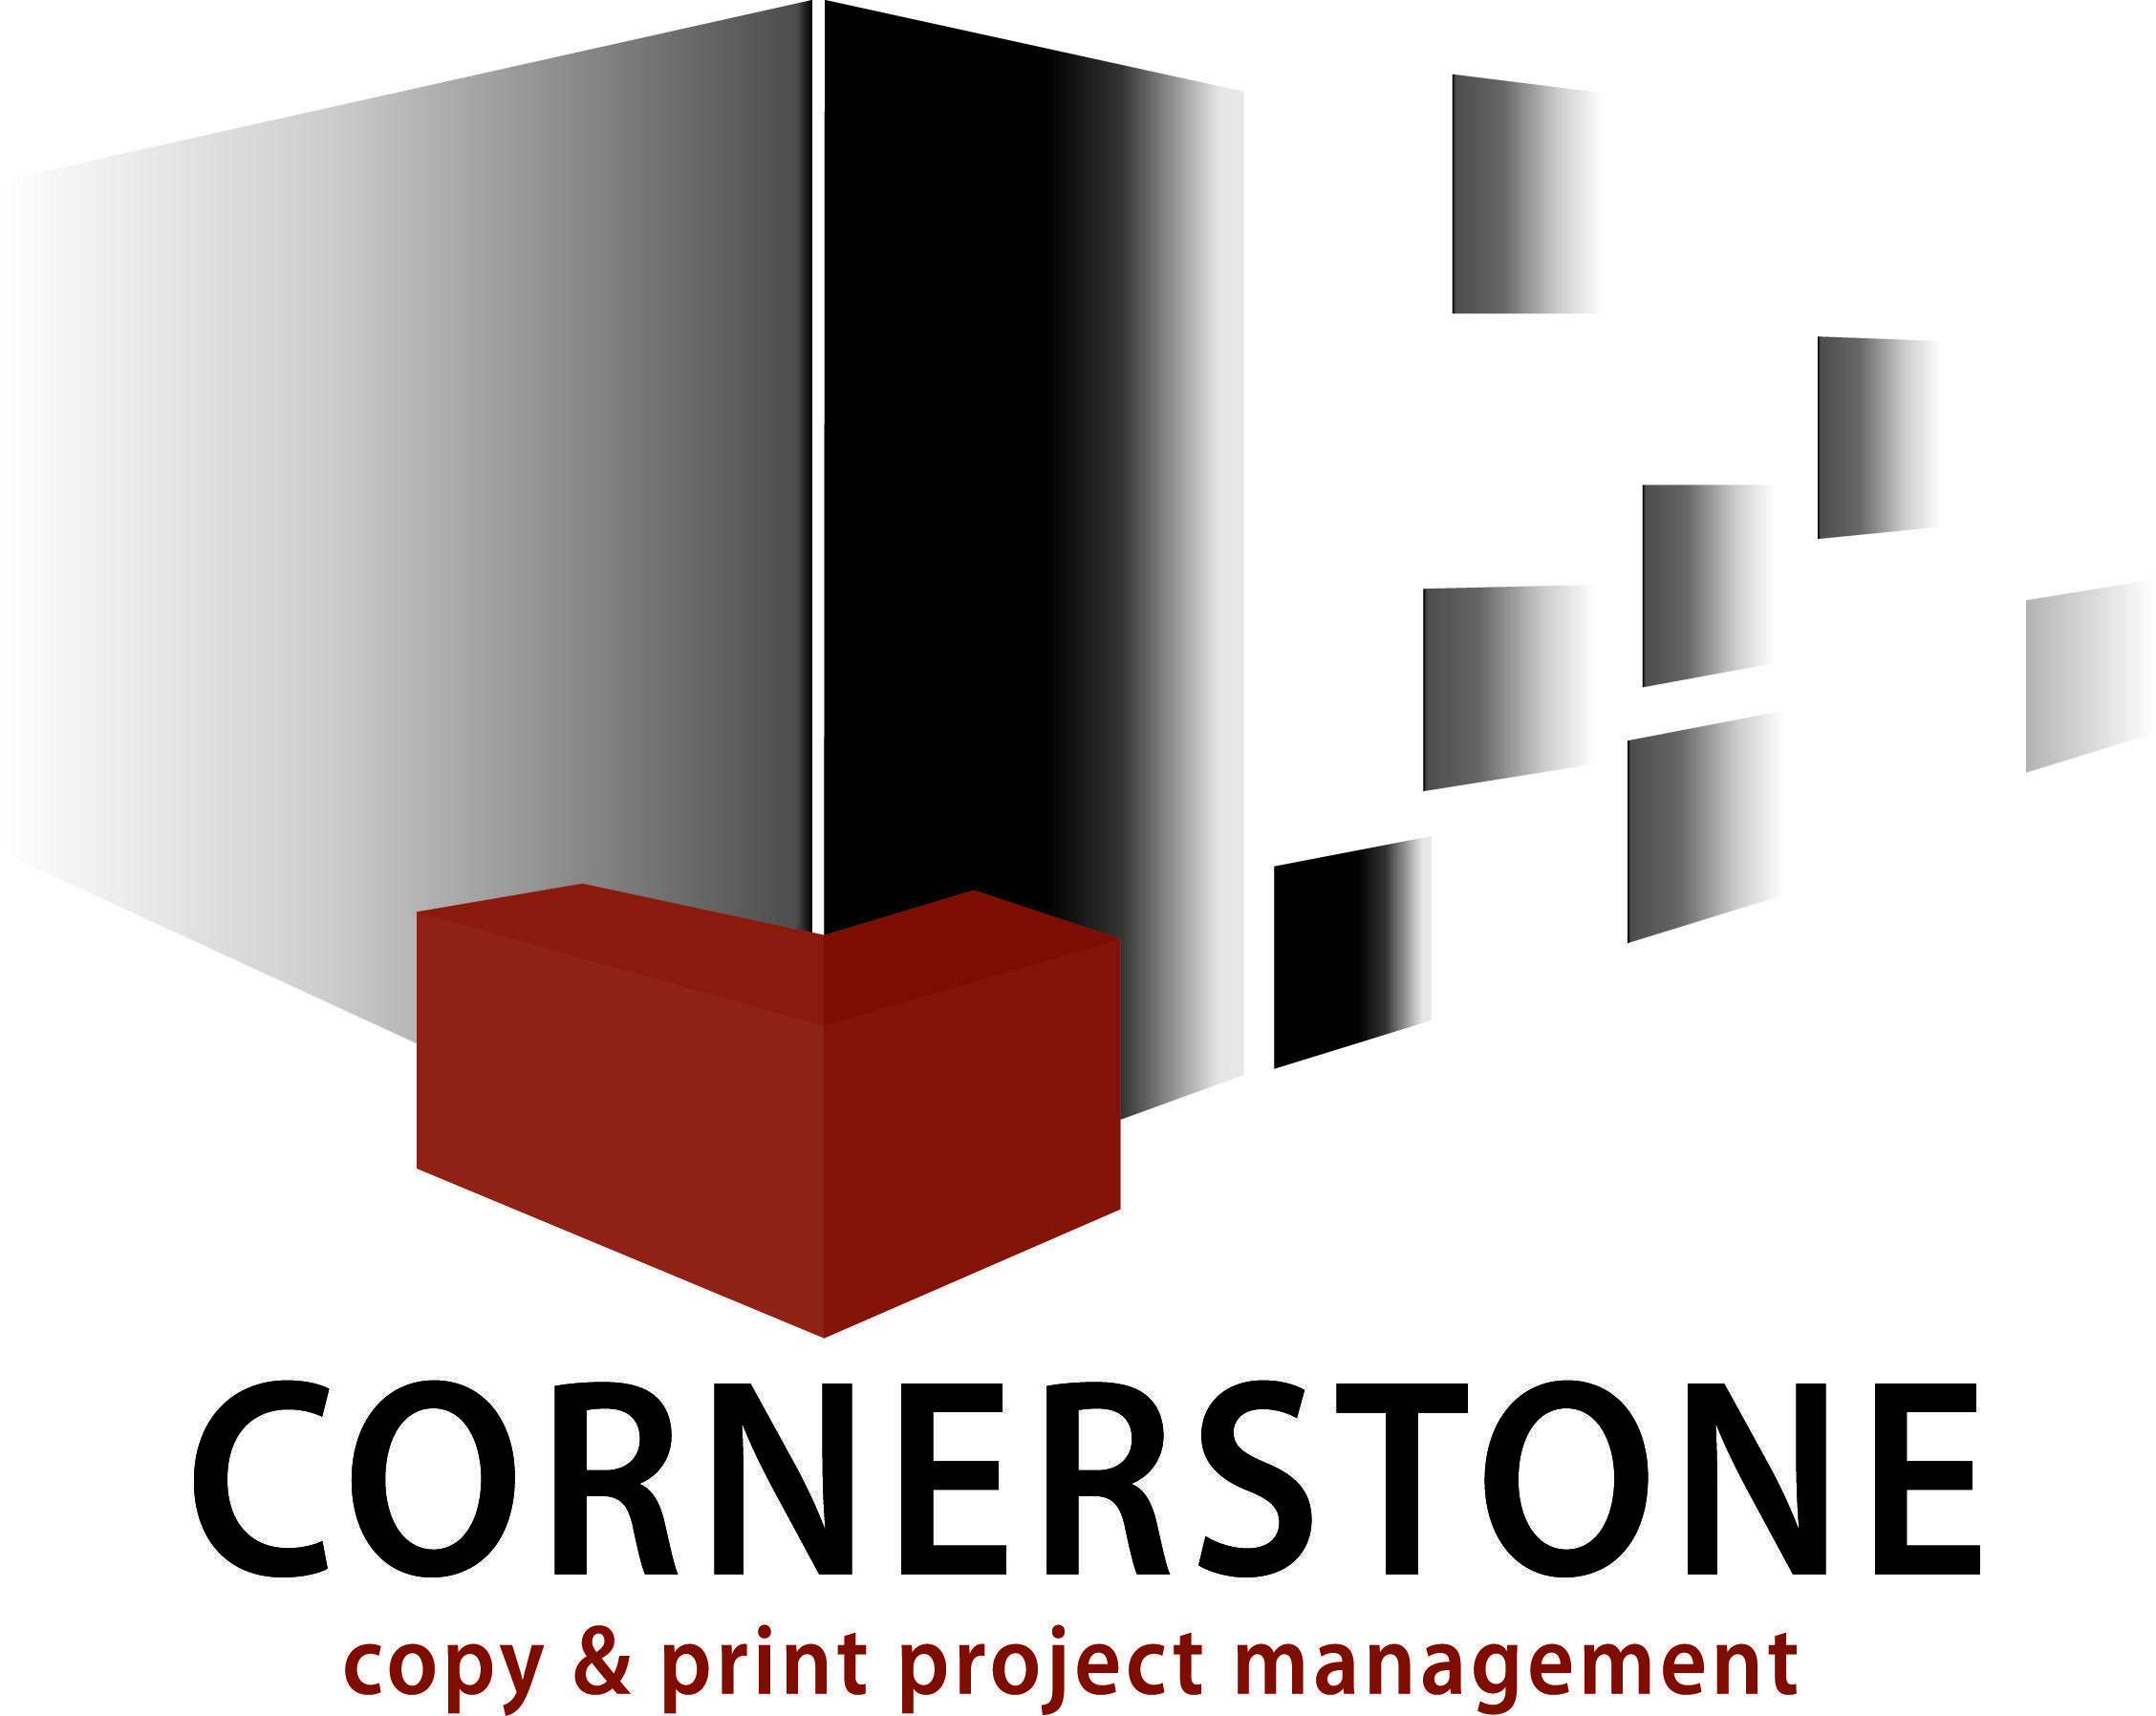 Cornerstone Logo - Cornerstone logo 1815 k with text outined R.I.D.E. Inc